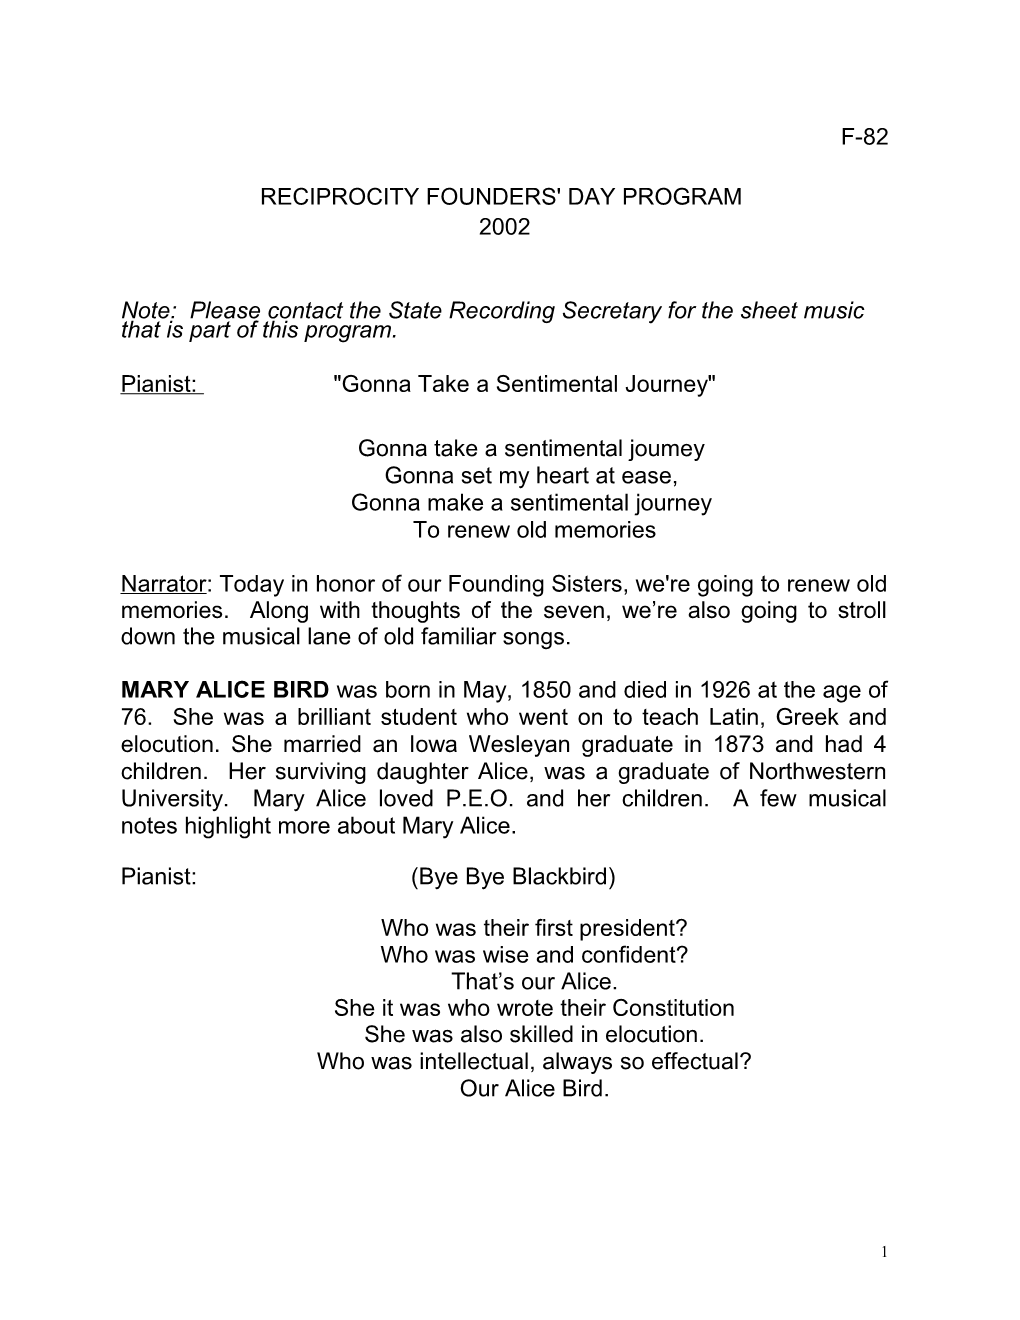 Reciprocity Founders' Day Program